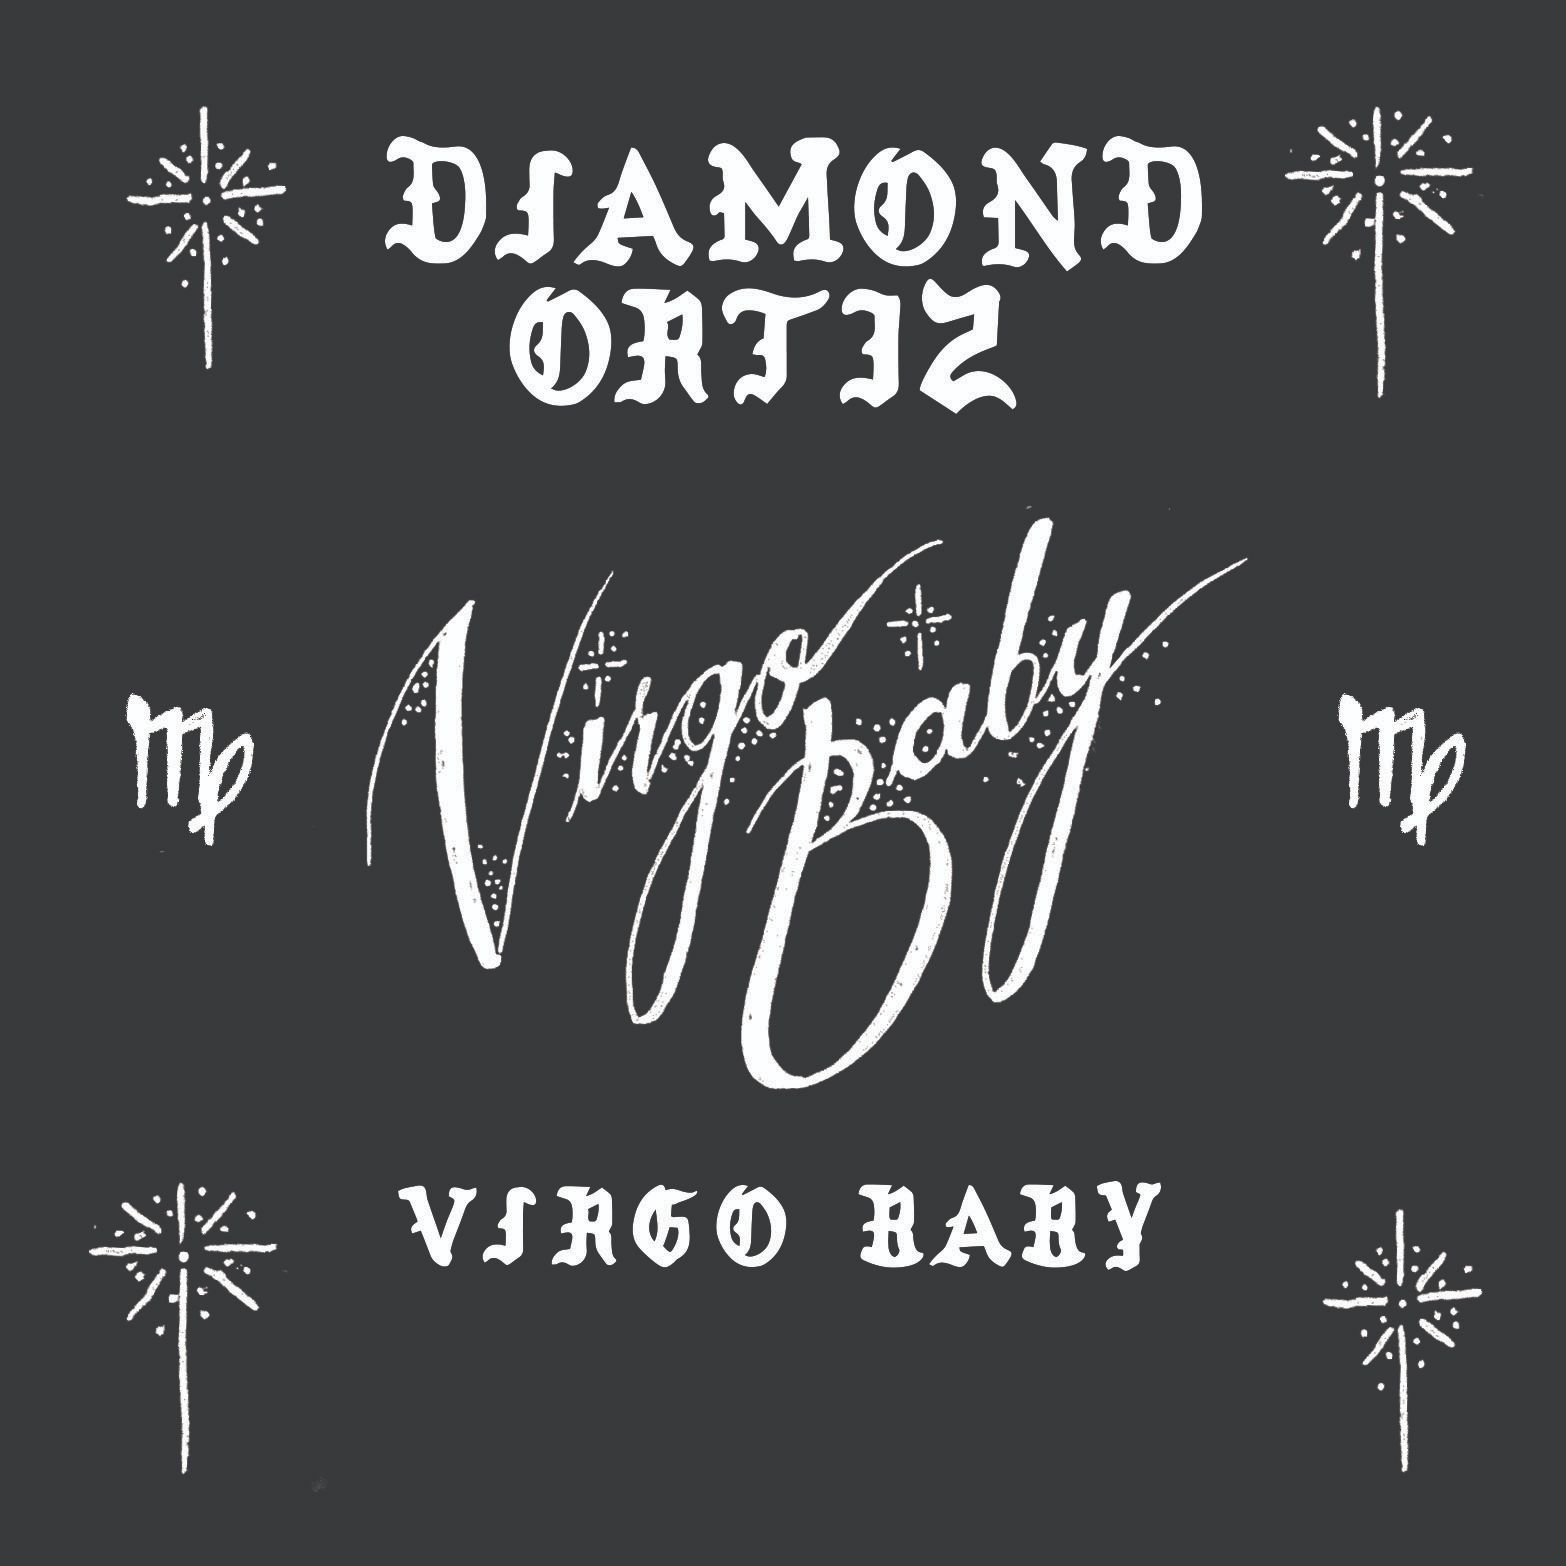 Diamond Ortiz Brings The Funk On “Virgo Baby”